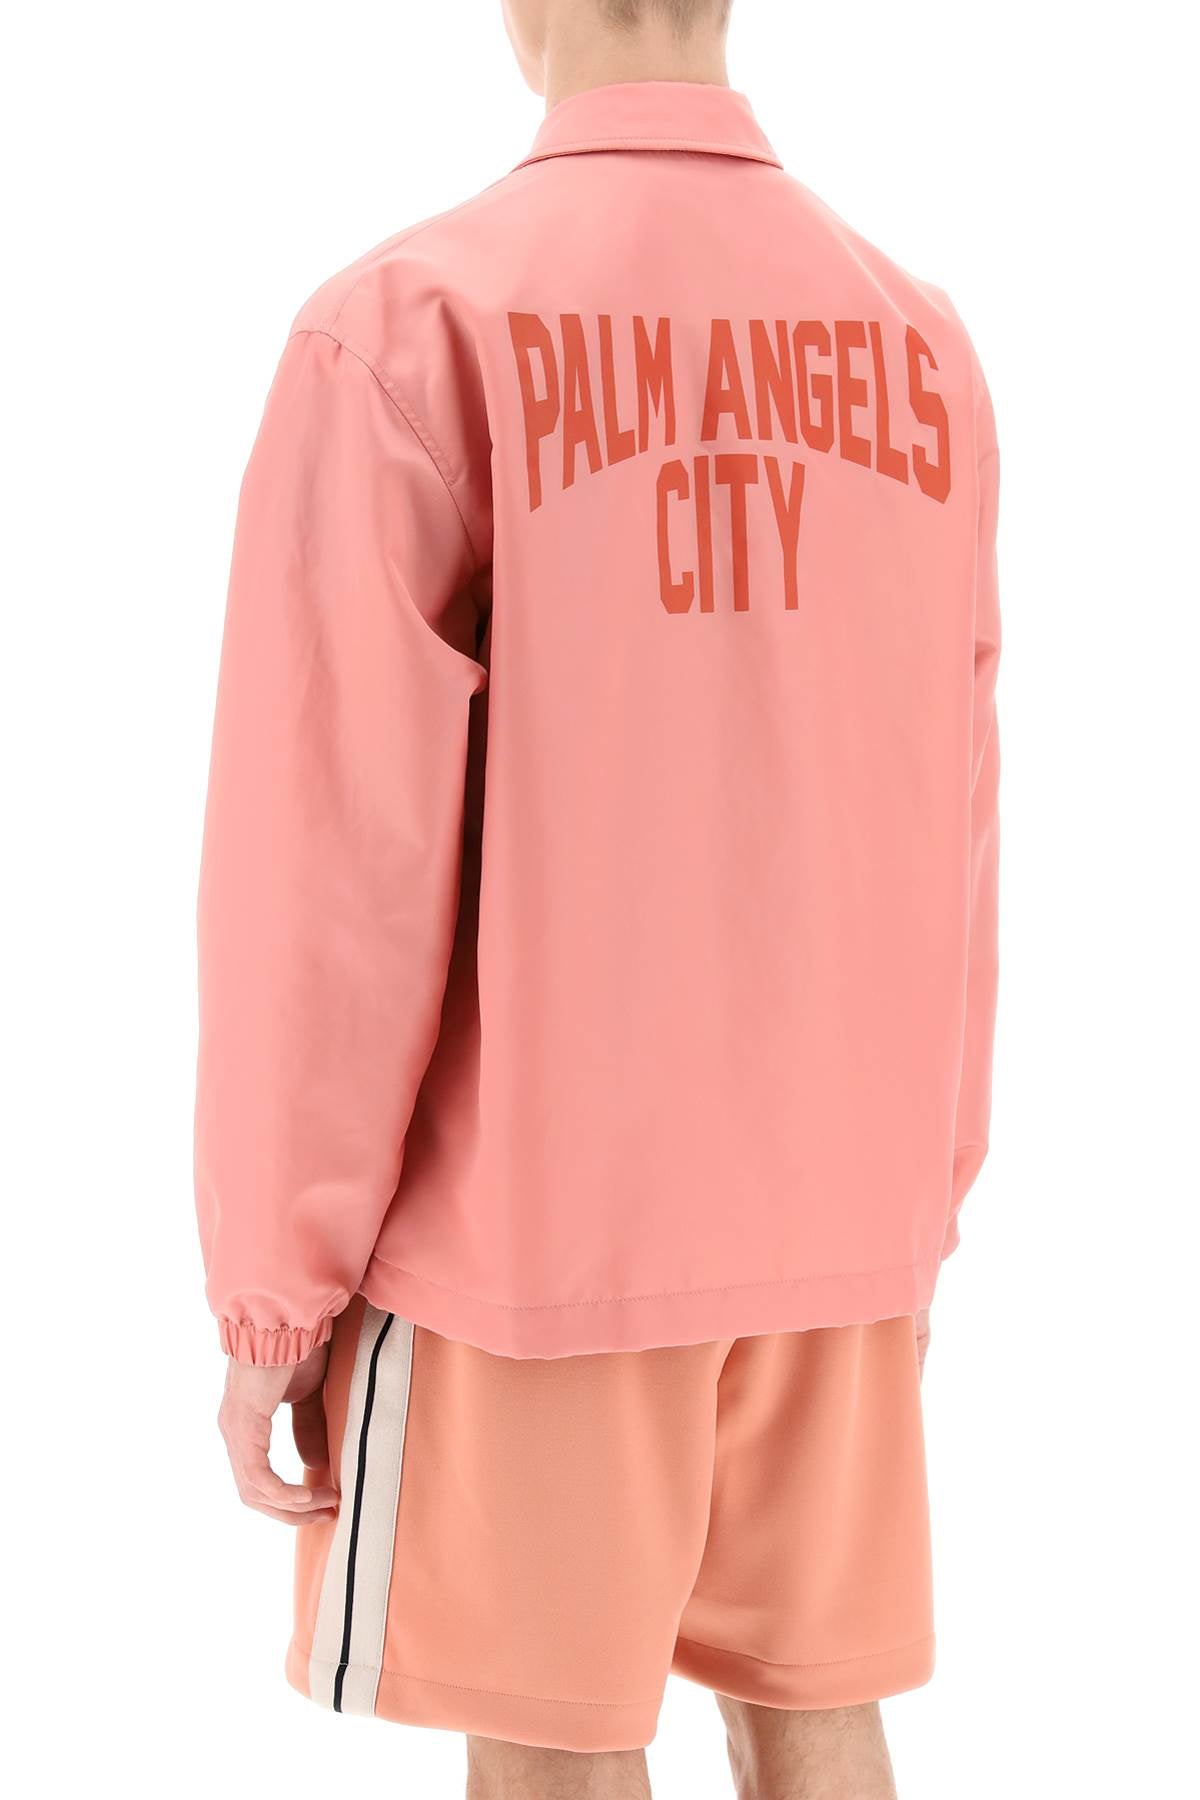 PALM ANGELS City Coach Jacket - Pink Nylon Twill